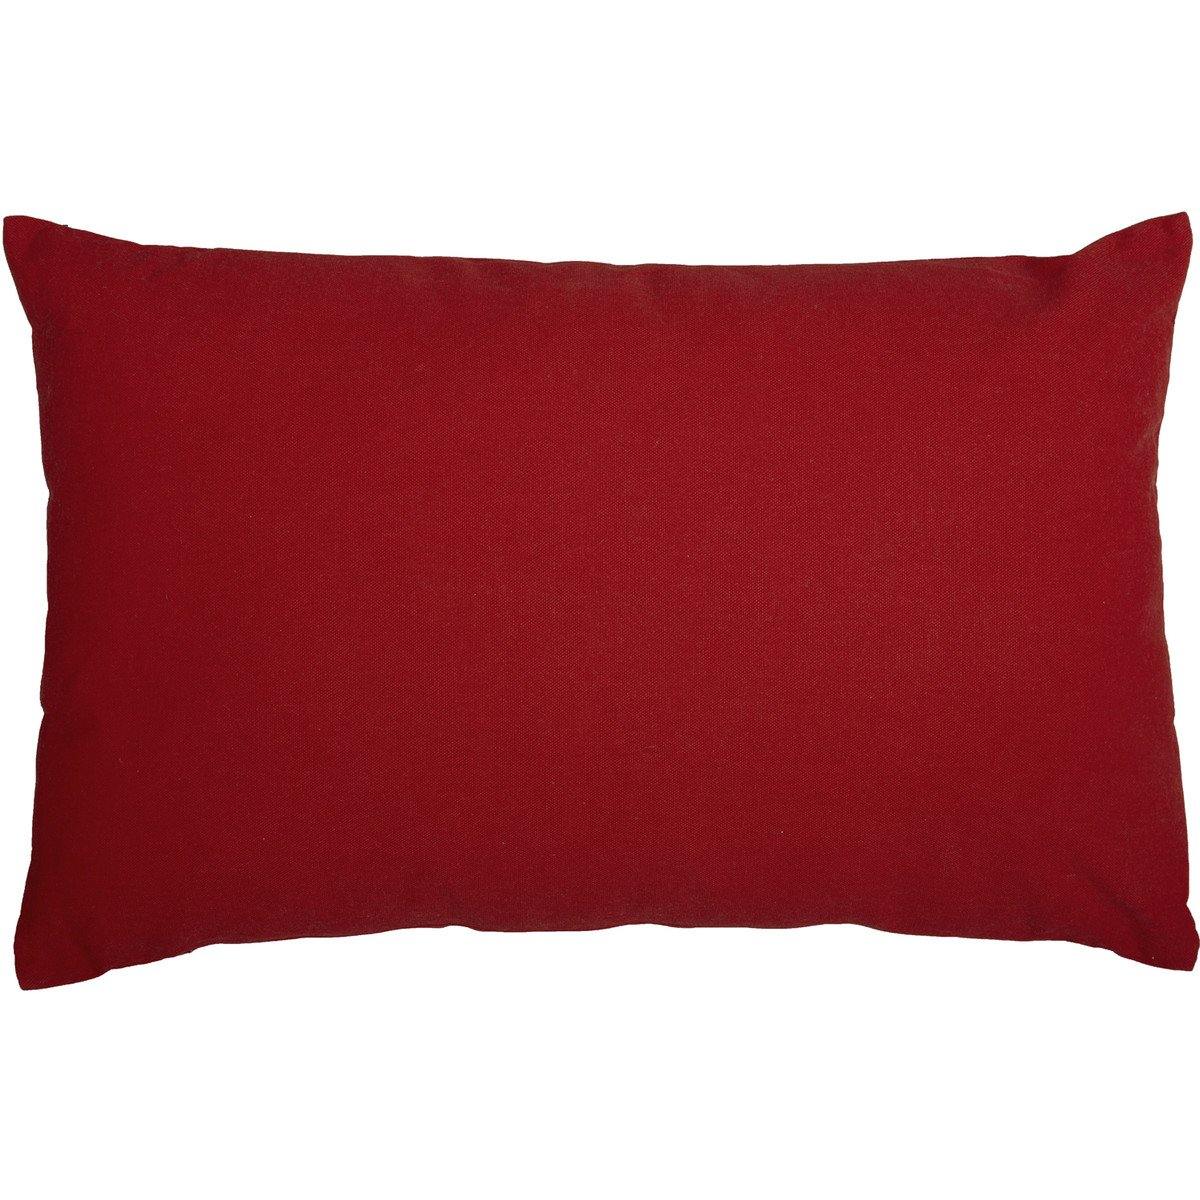 North Pole Airmail Pillow 14"x22" - The Fox Decor